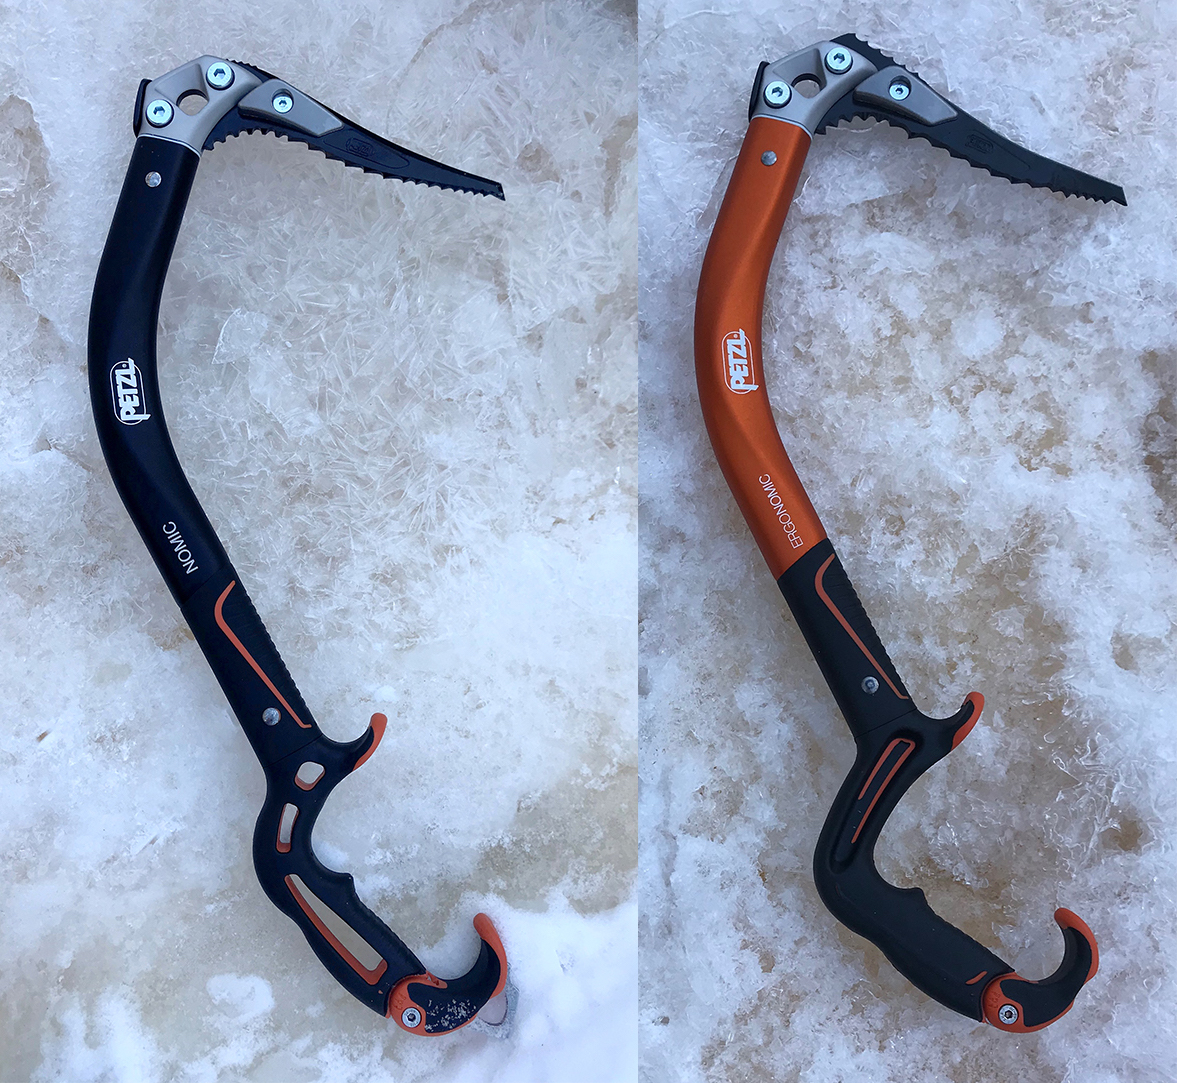 The new versions of the Petzl Nomic (left) and Ergonomic ice tools. [Photo] Chris Van Leuven